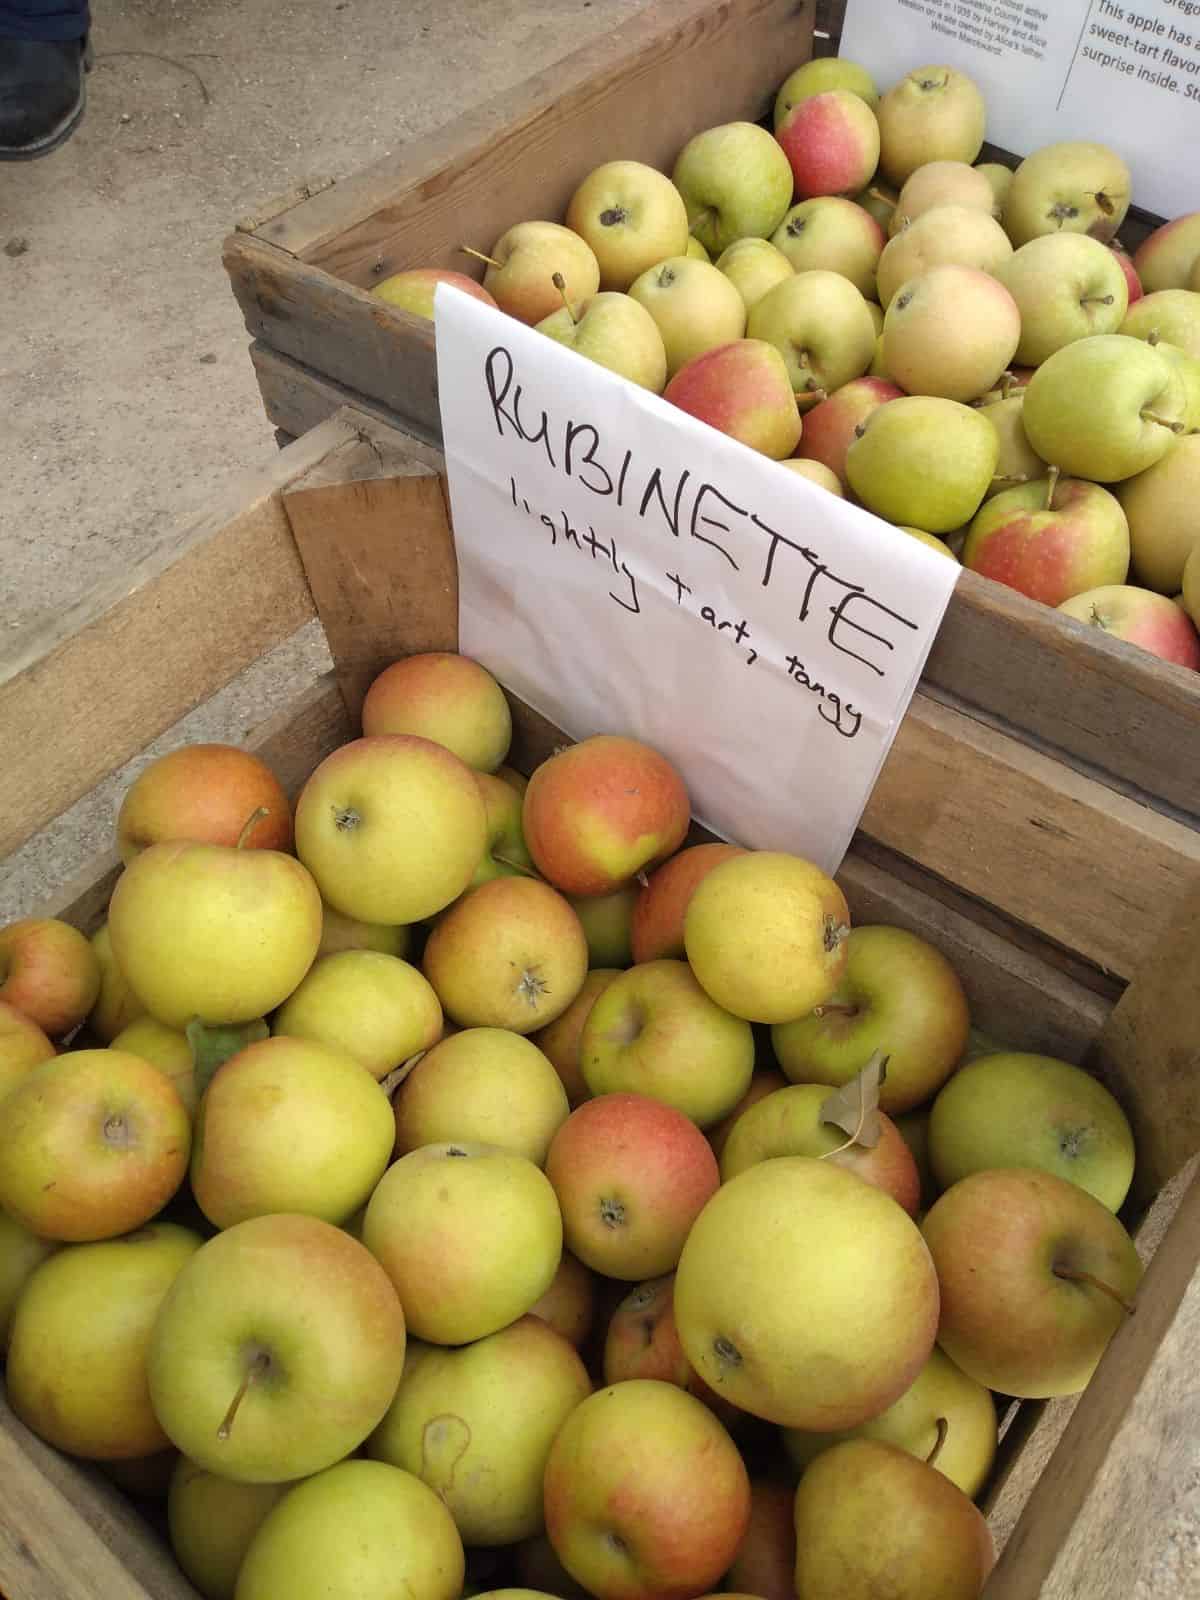 Bins of Rubinette apples at a farmers market